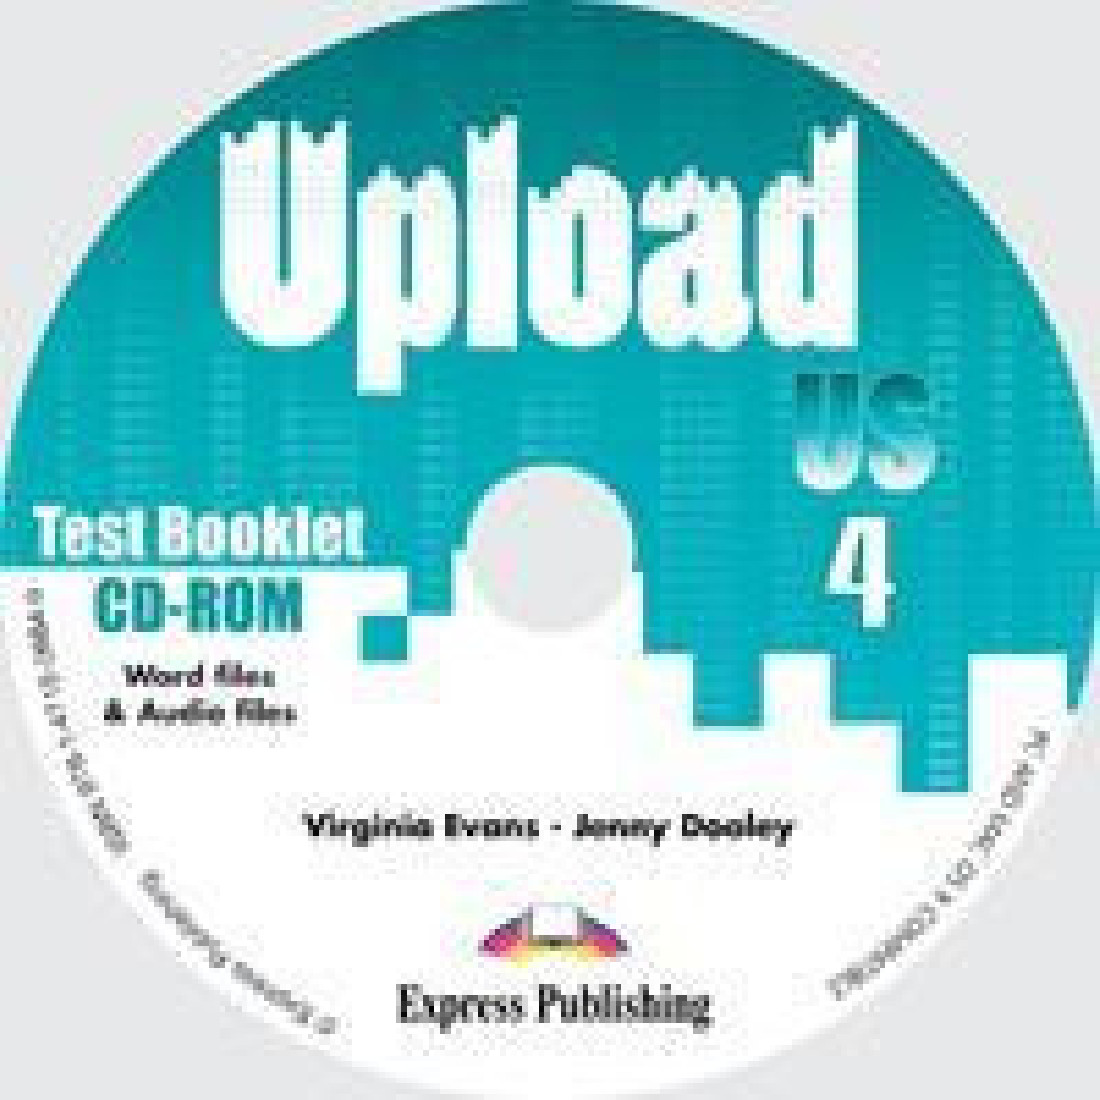 UPLOAD US 4 TEST BOOK CD-ROM